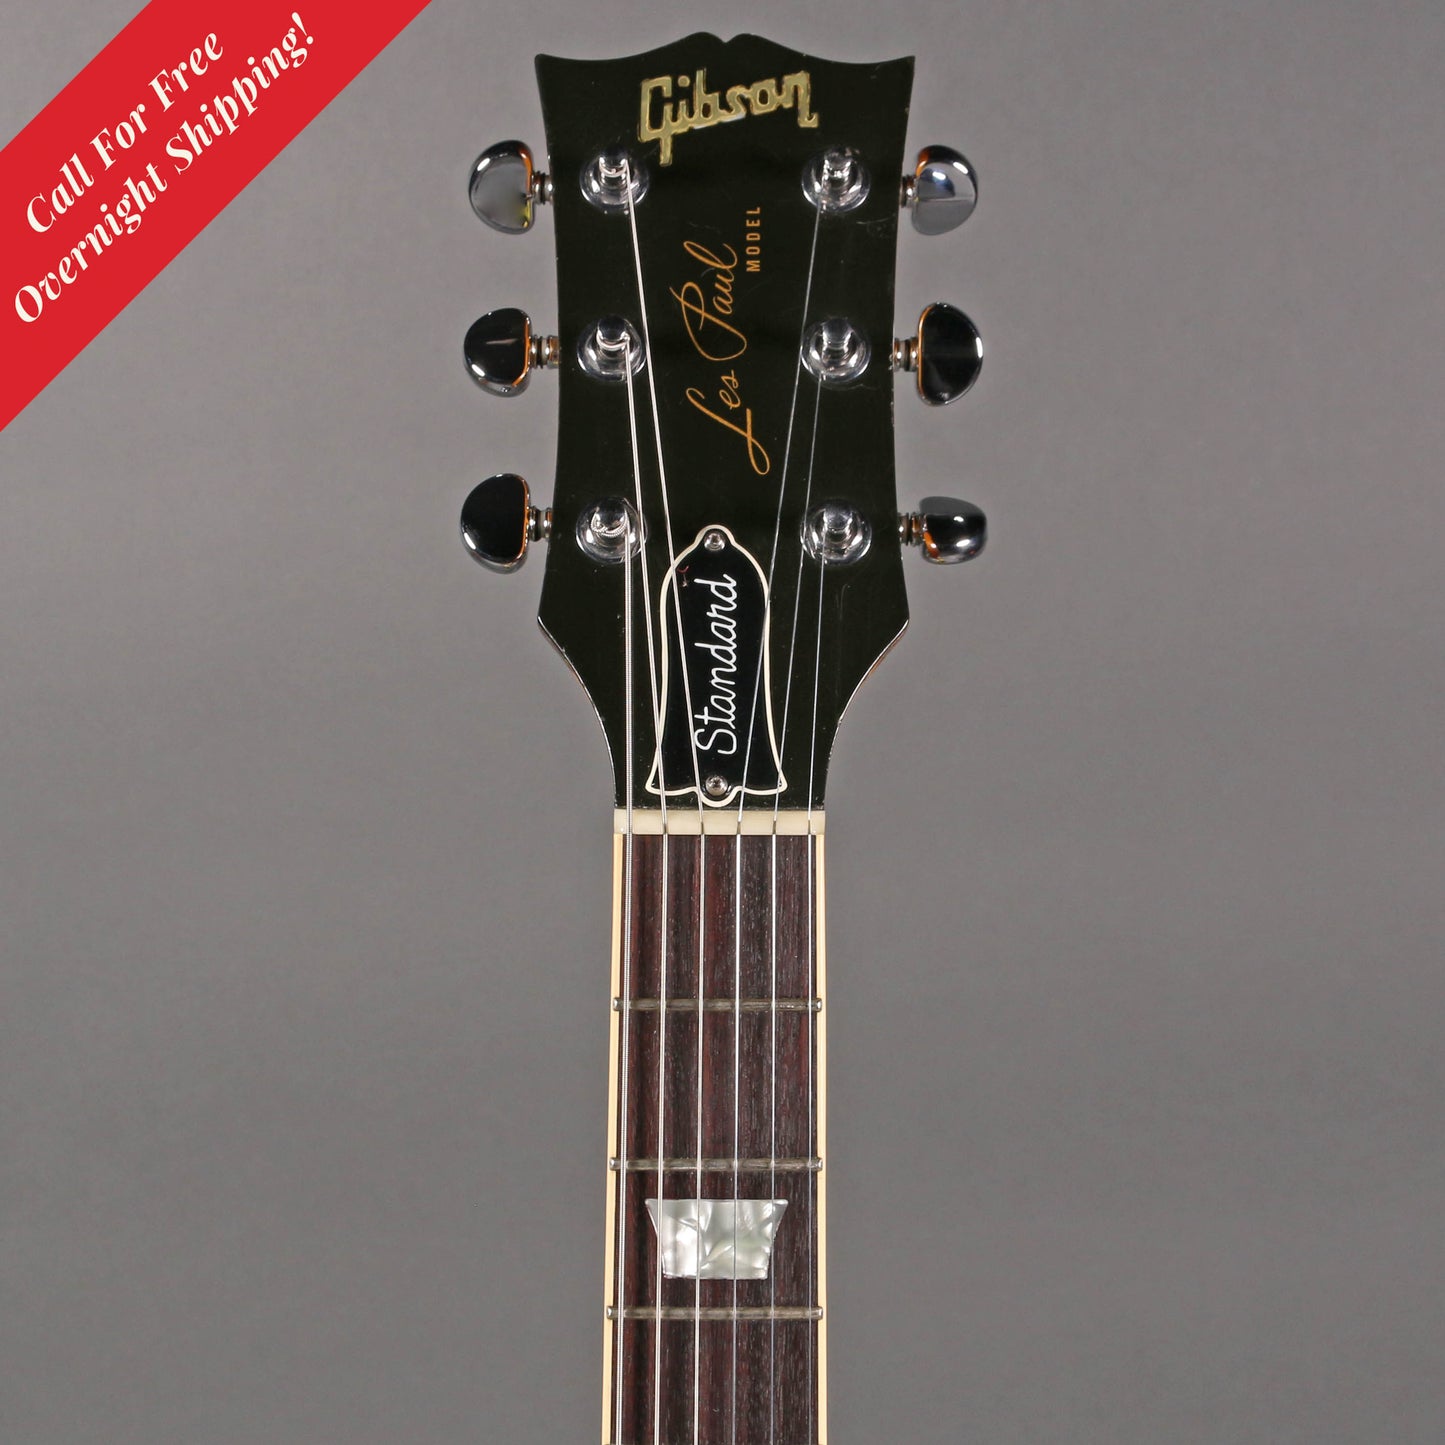 1979 Gibson Les Paul Standard